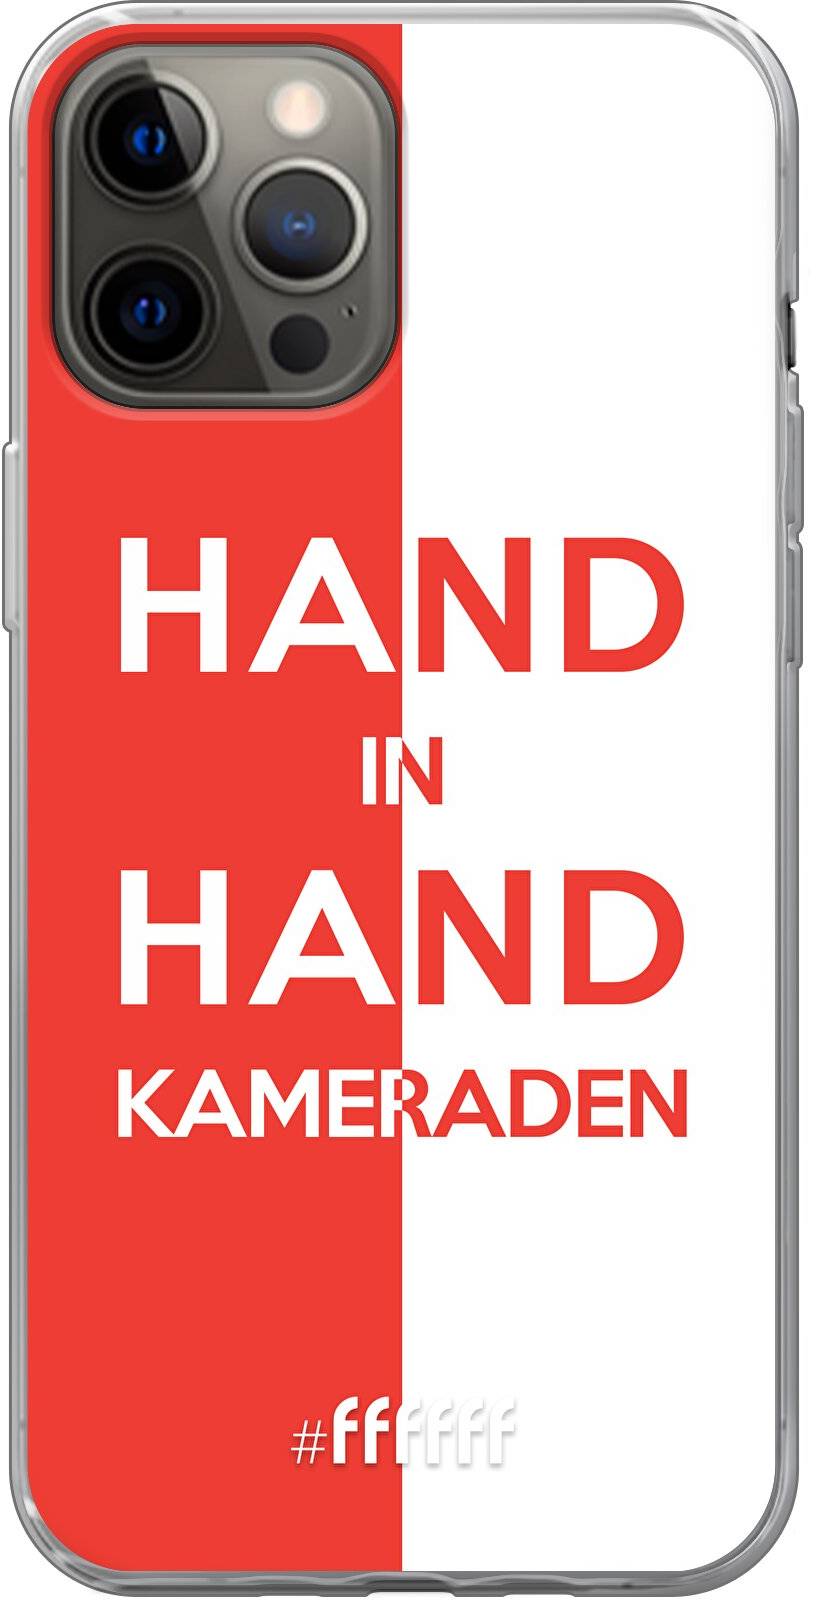 Feyenoord - Hand in hand, kameraden iPhone 12 Pro Max